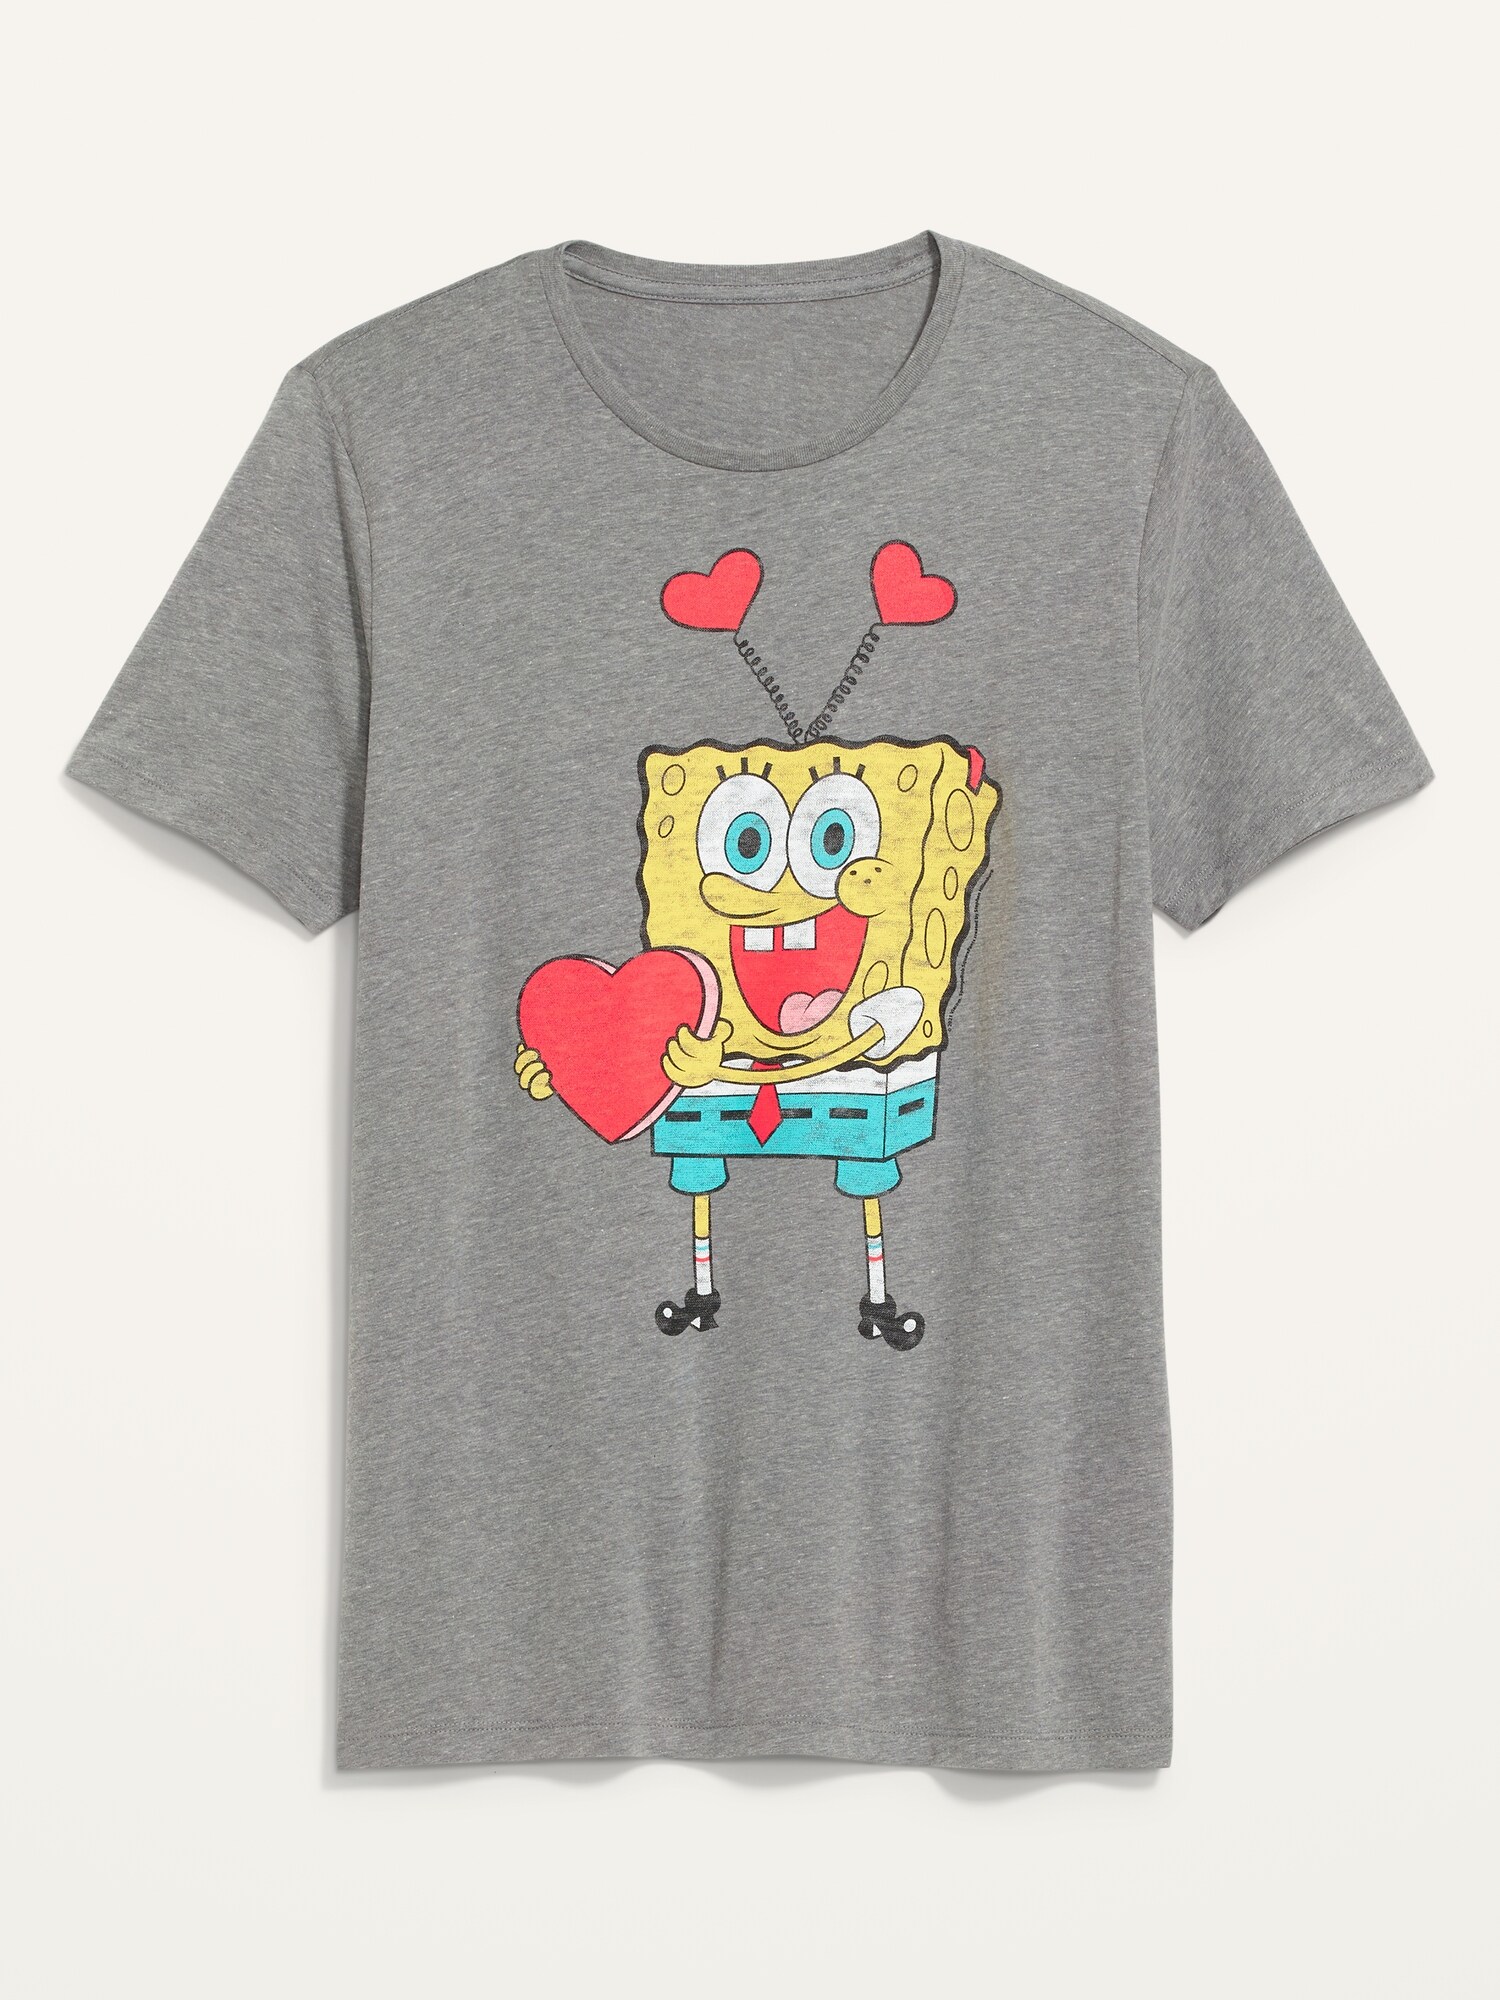 Spongebob Squarepants™ Valentines Day Gender Neutral T Shirt For Adults Old Navy 6060